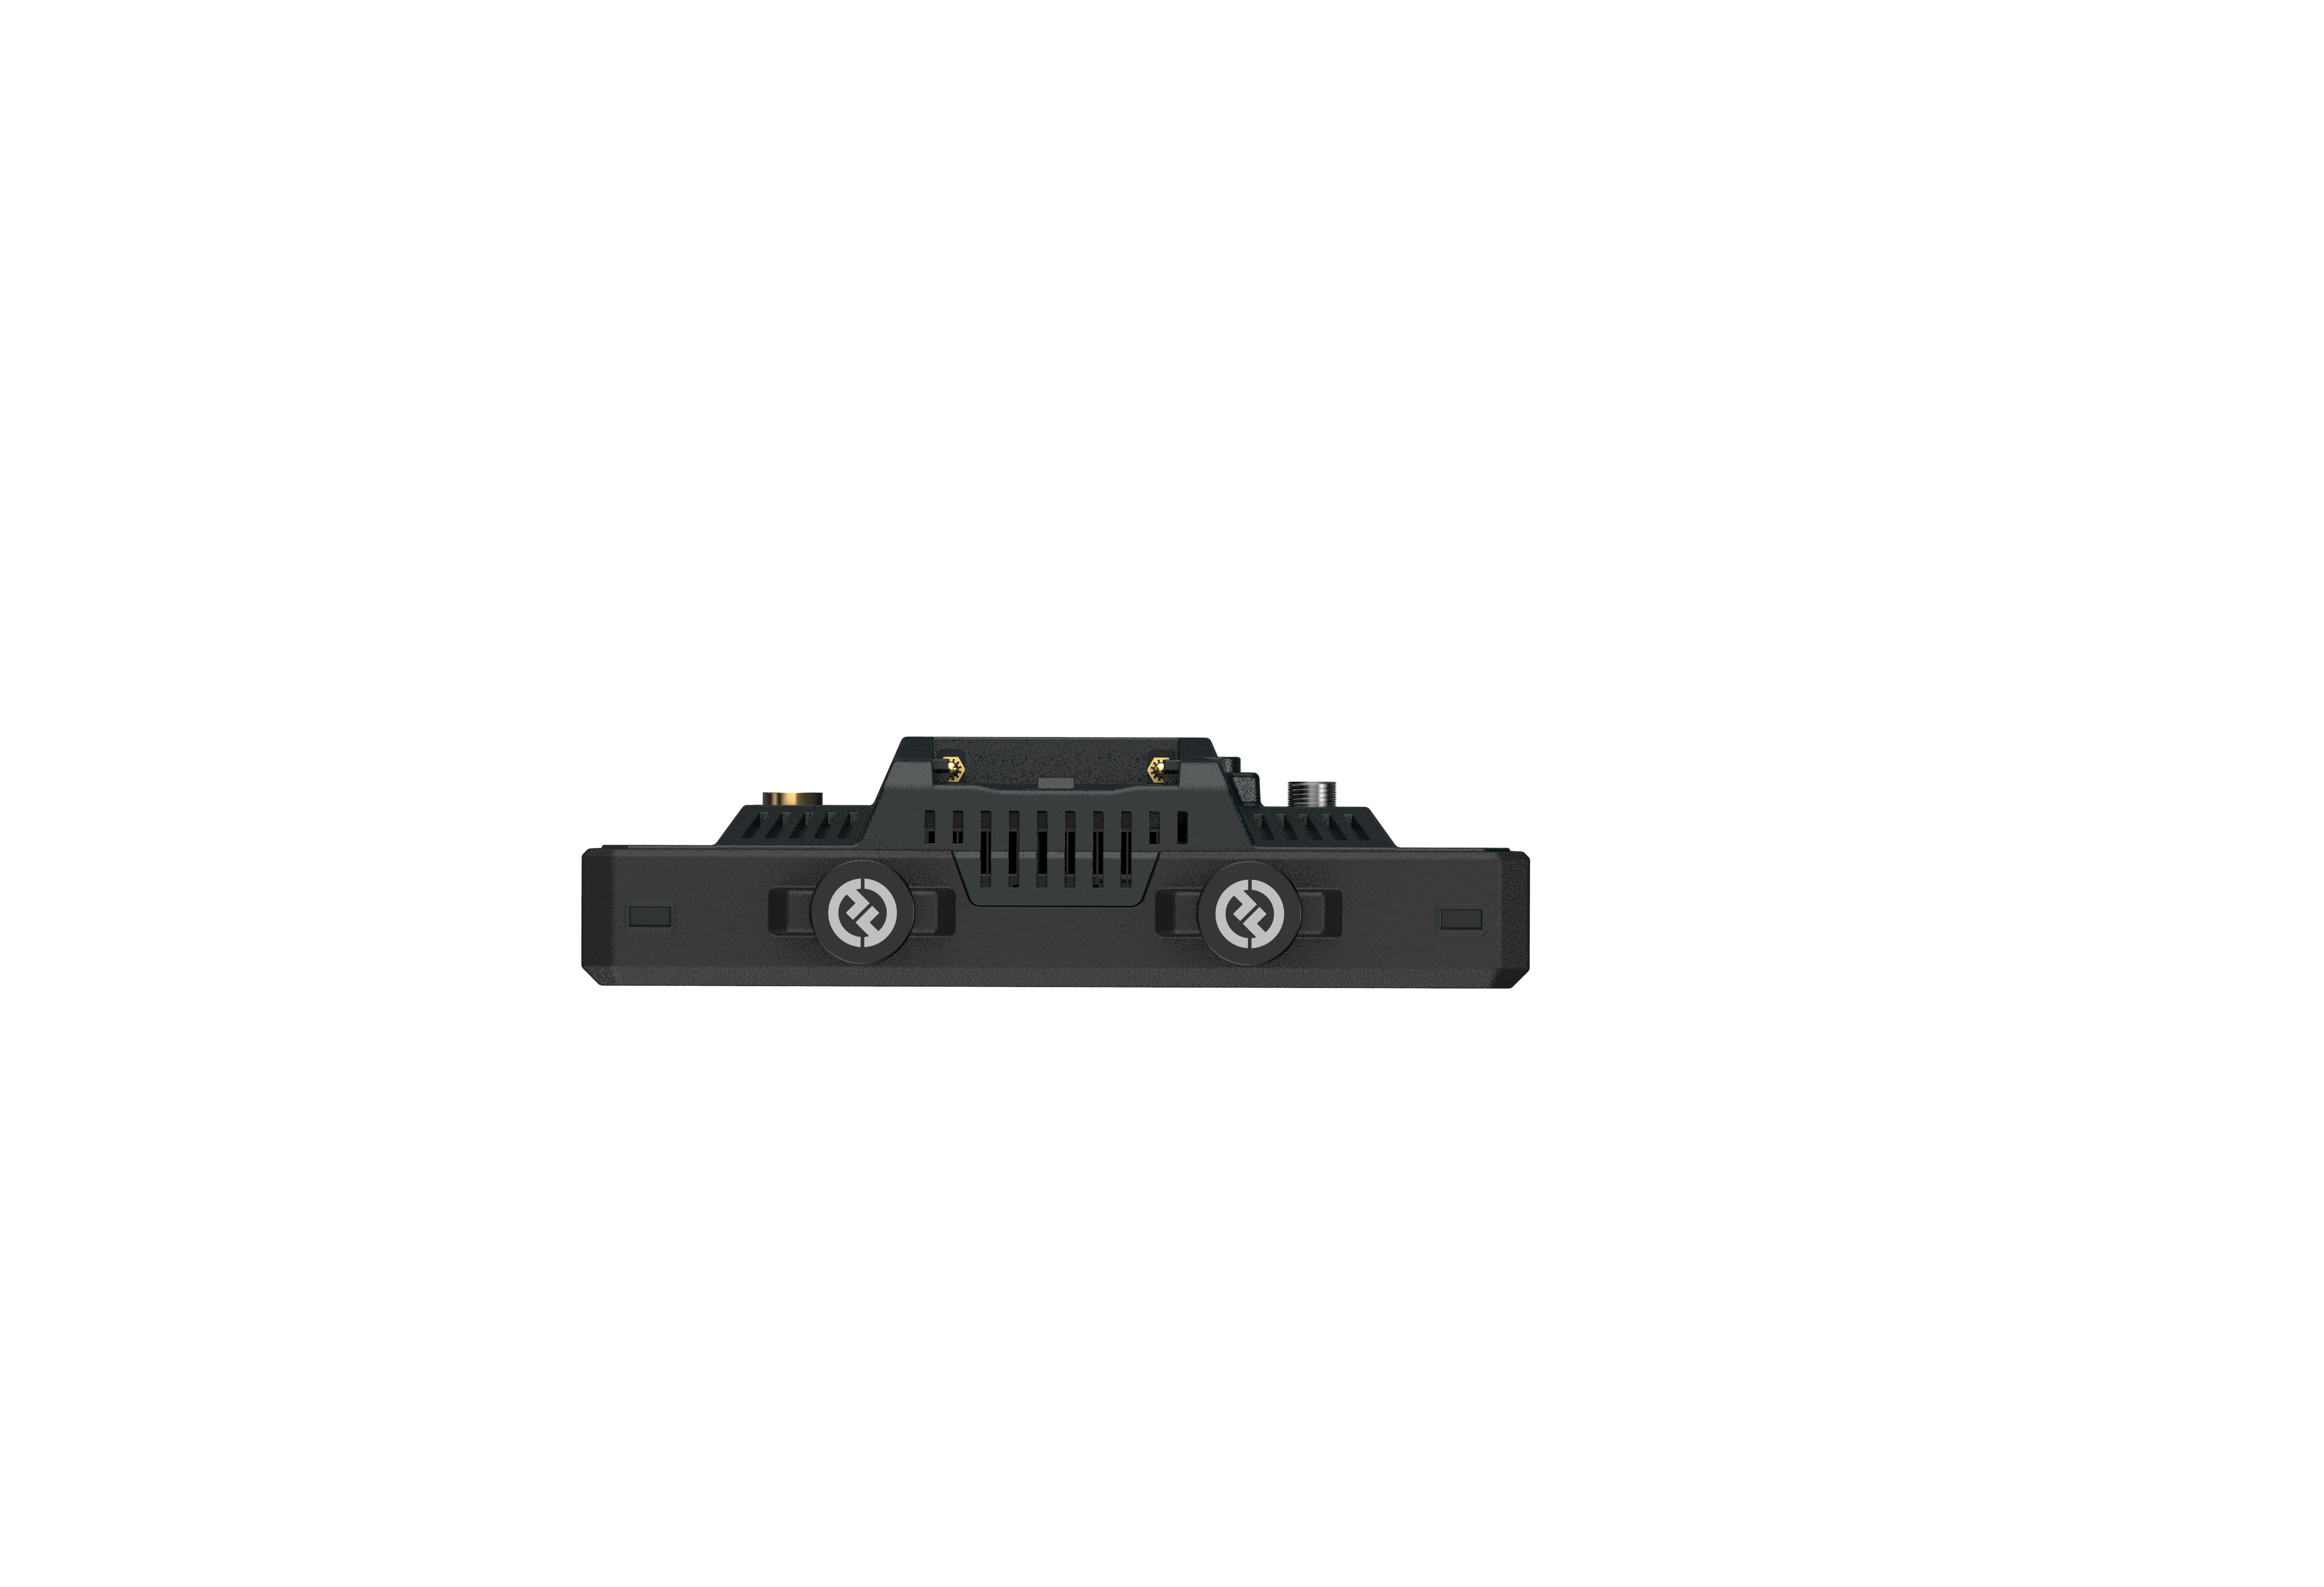 Hollyland Mars M1 Enhanced Kit Dual 5.5" Wireless Transceiving Monitor HL-Mars M1 Enhanced Kit